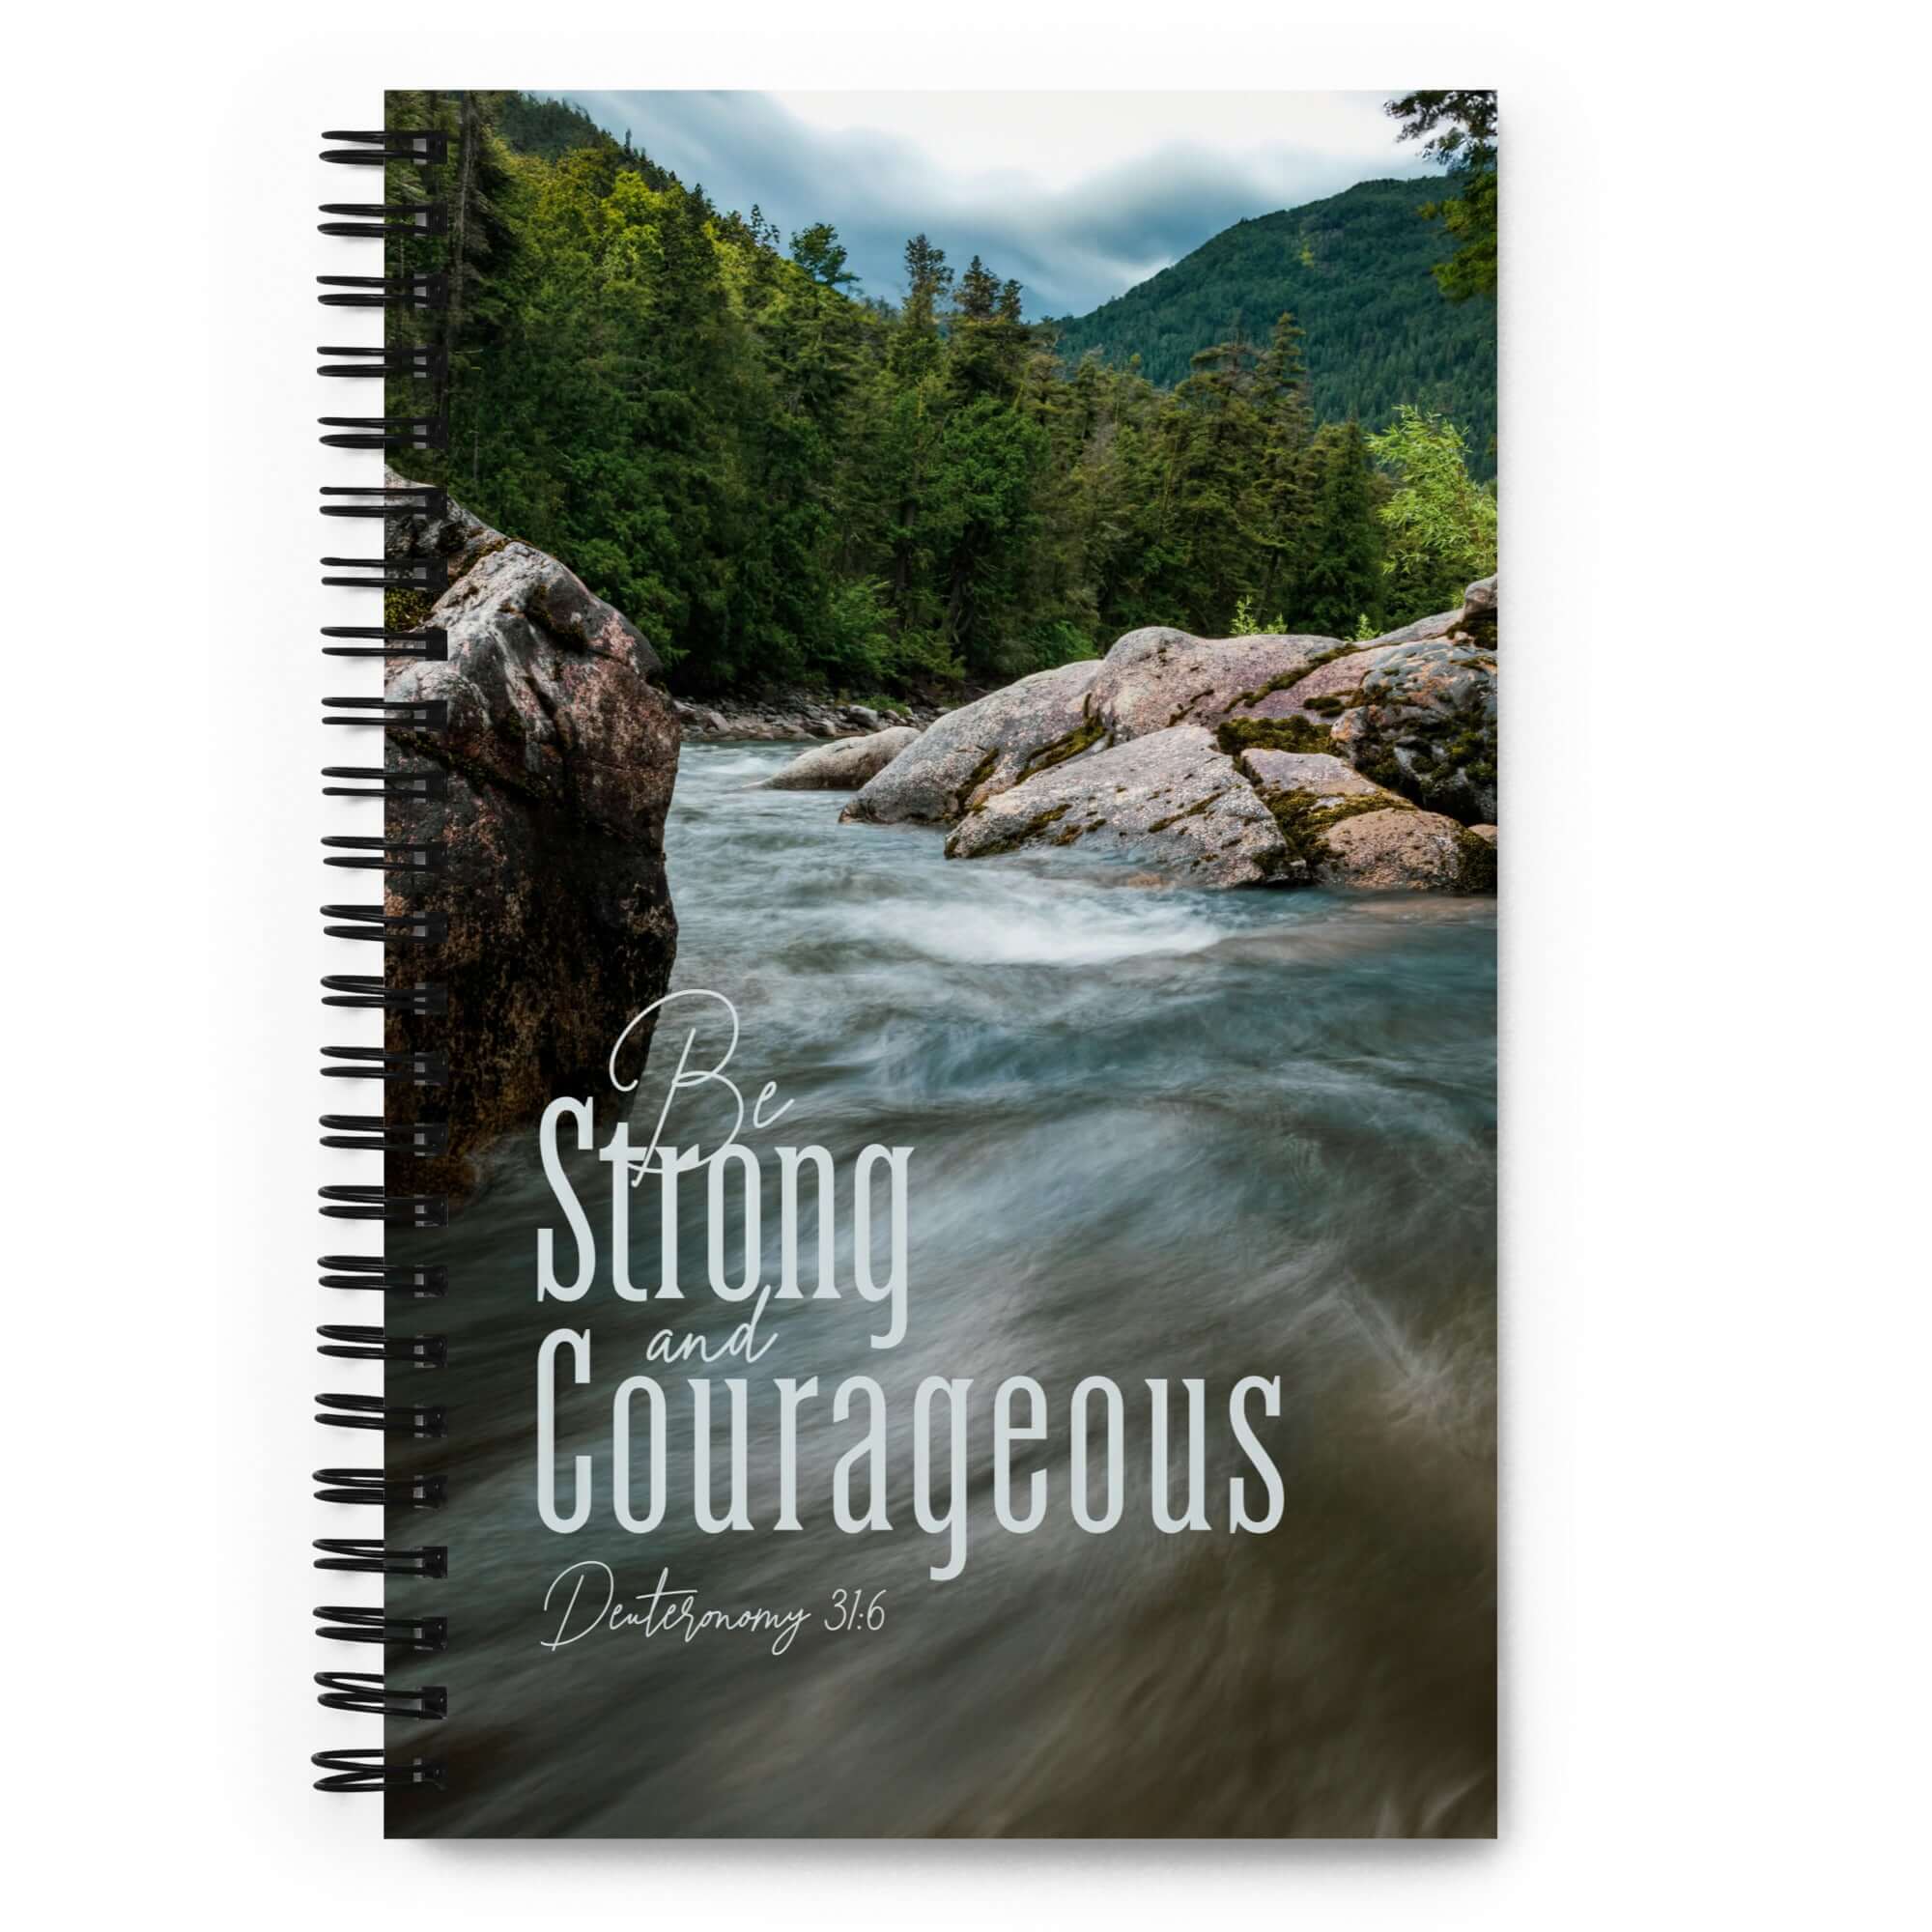 Deut 31:6 - Bible Verse, Be strong and courageous Spiral Notebook